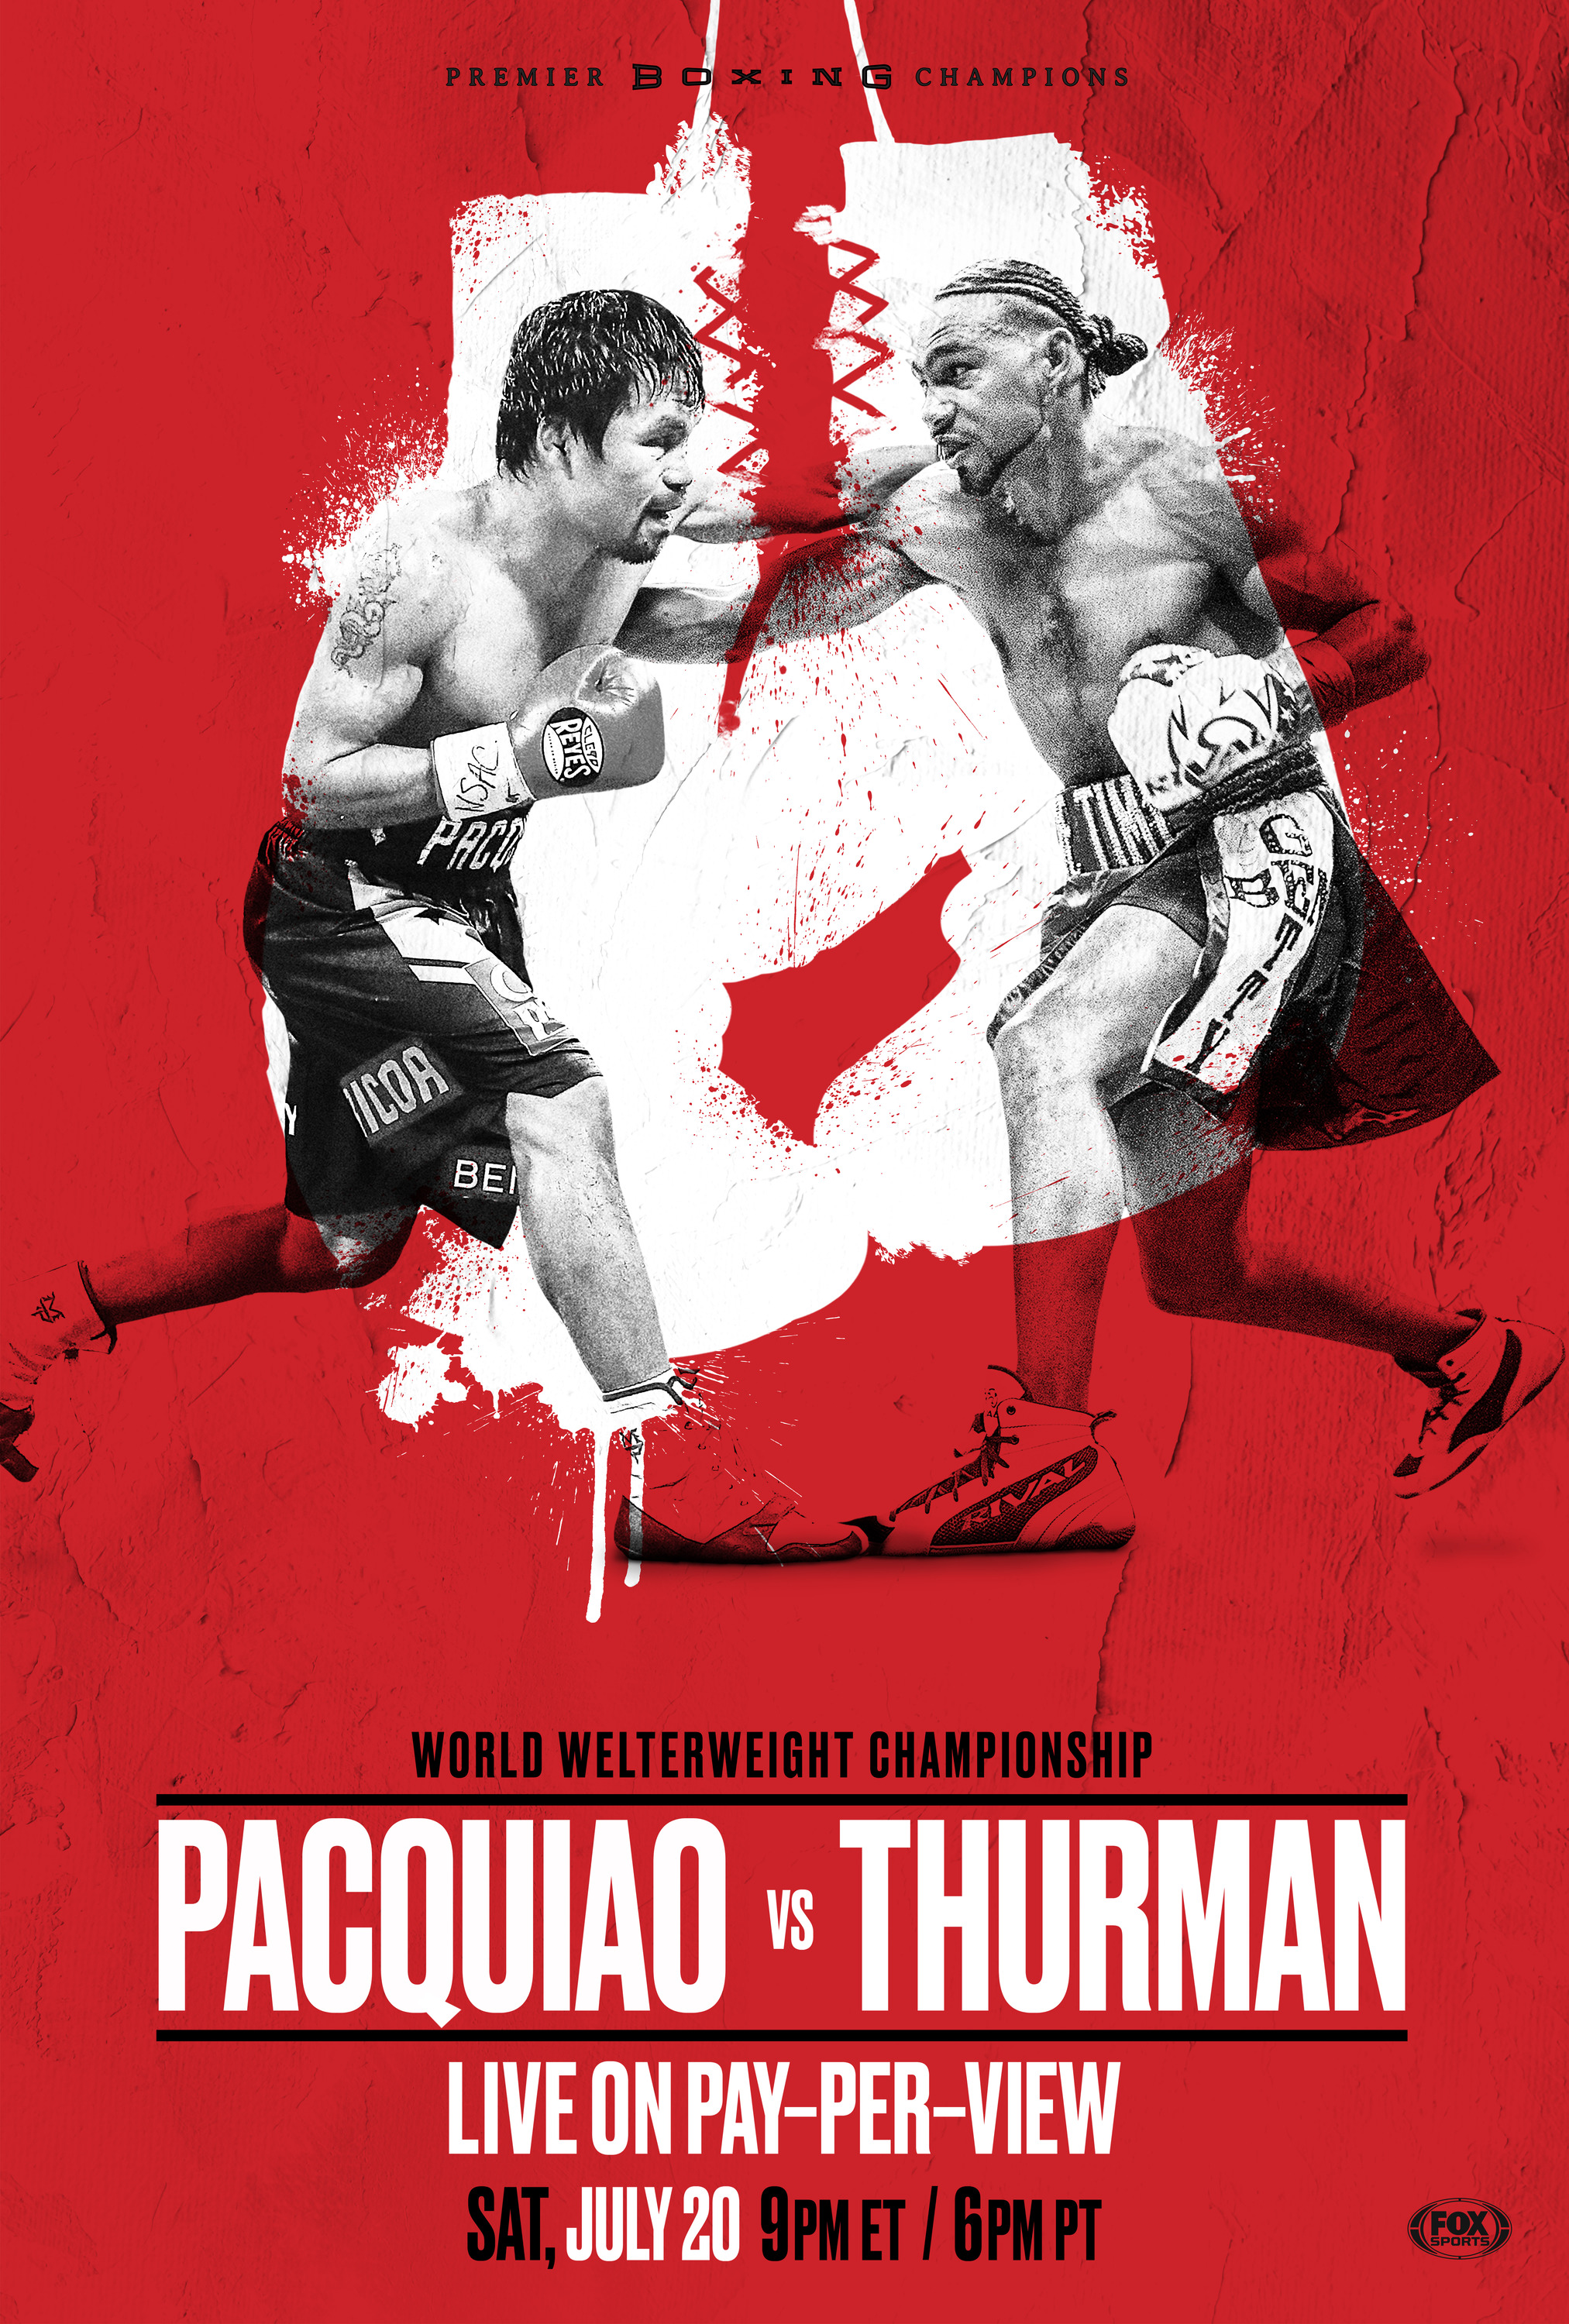 Mega Sized TV Poster Image for Pacquiao vs. Thurman 